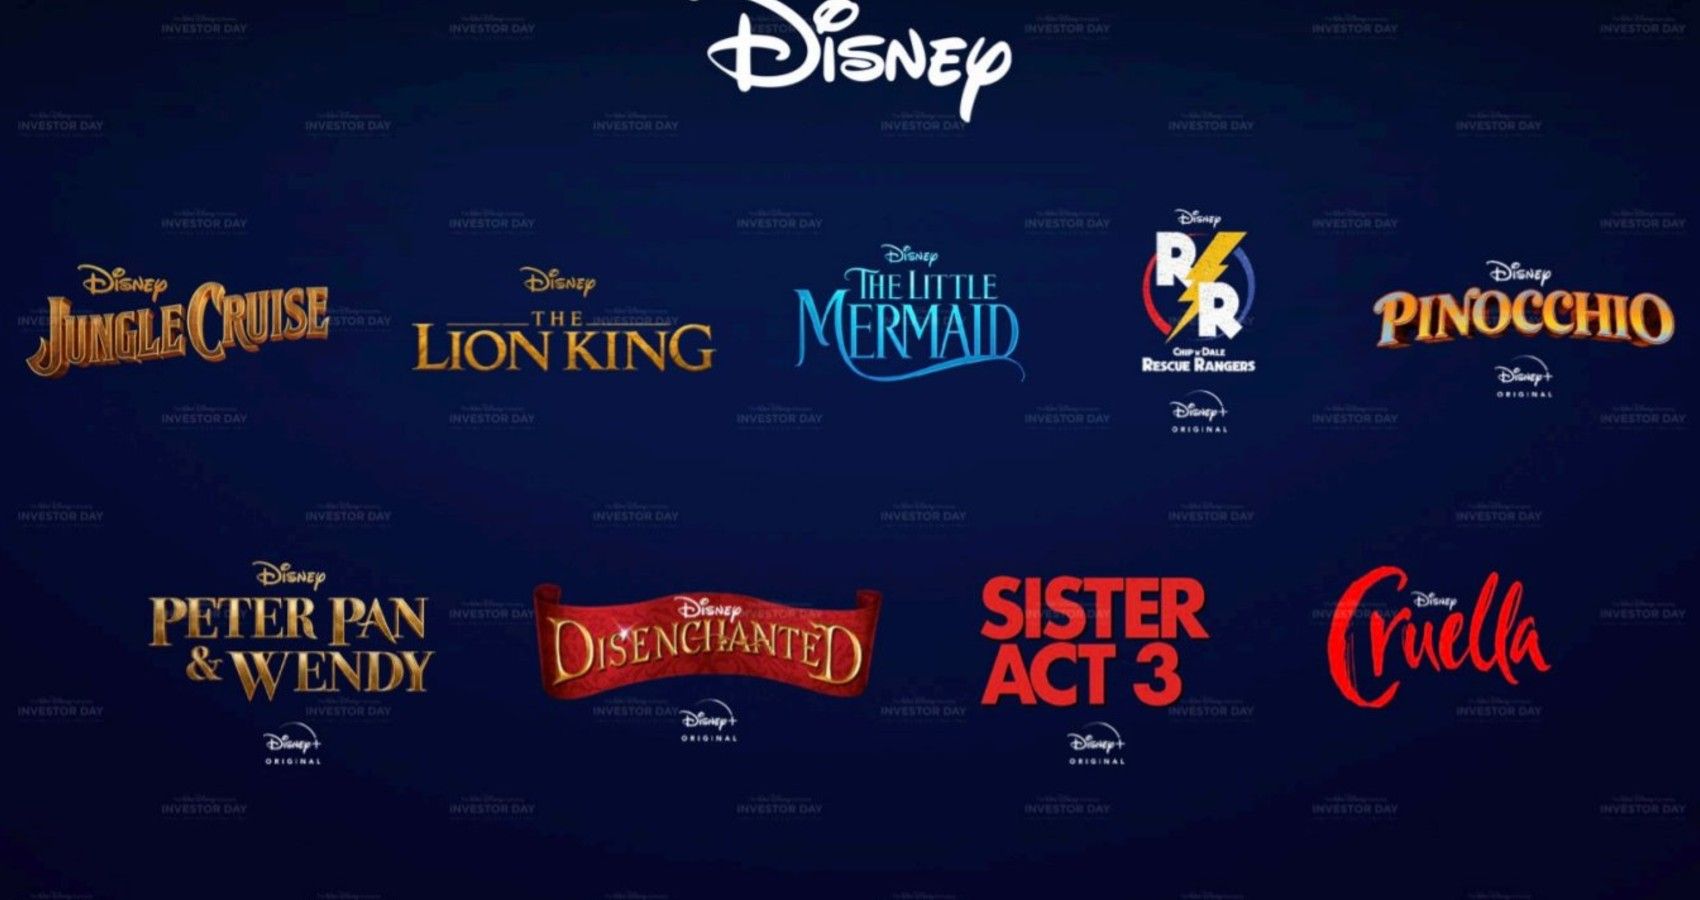 New Disney titles coming soon